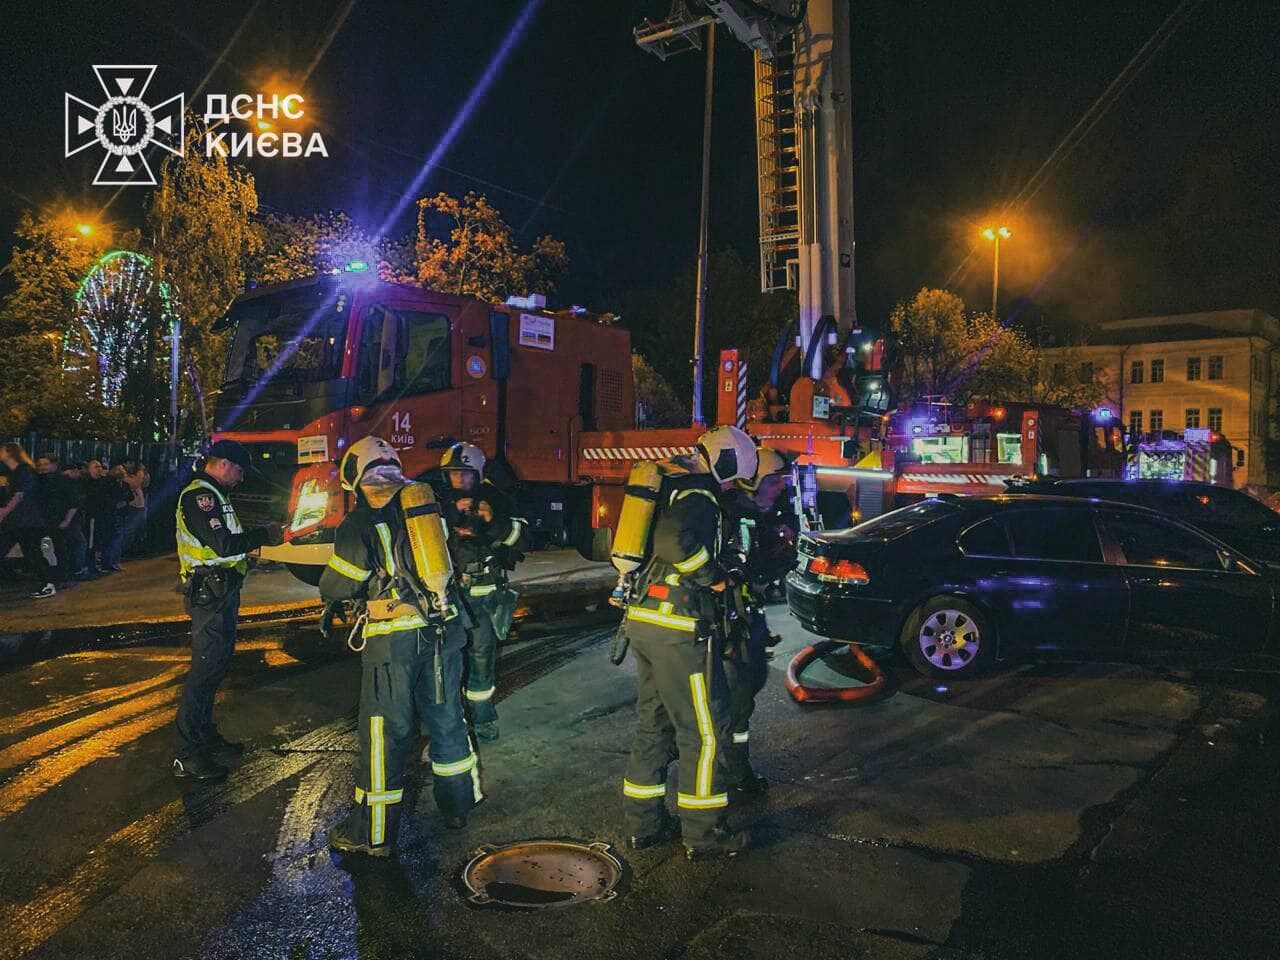 В Киеве на Подоле горел ресторан: известно подробности. Фото и видео